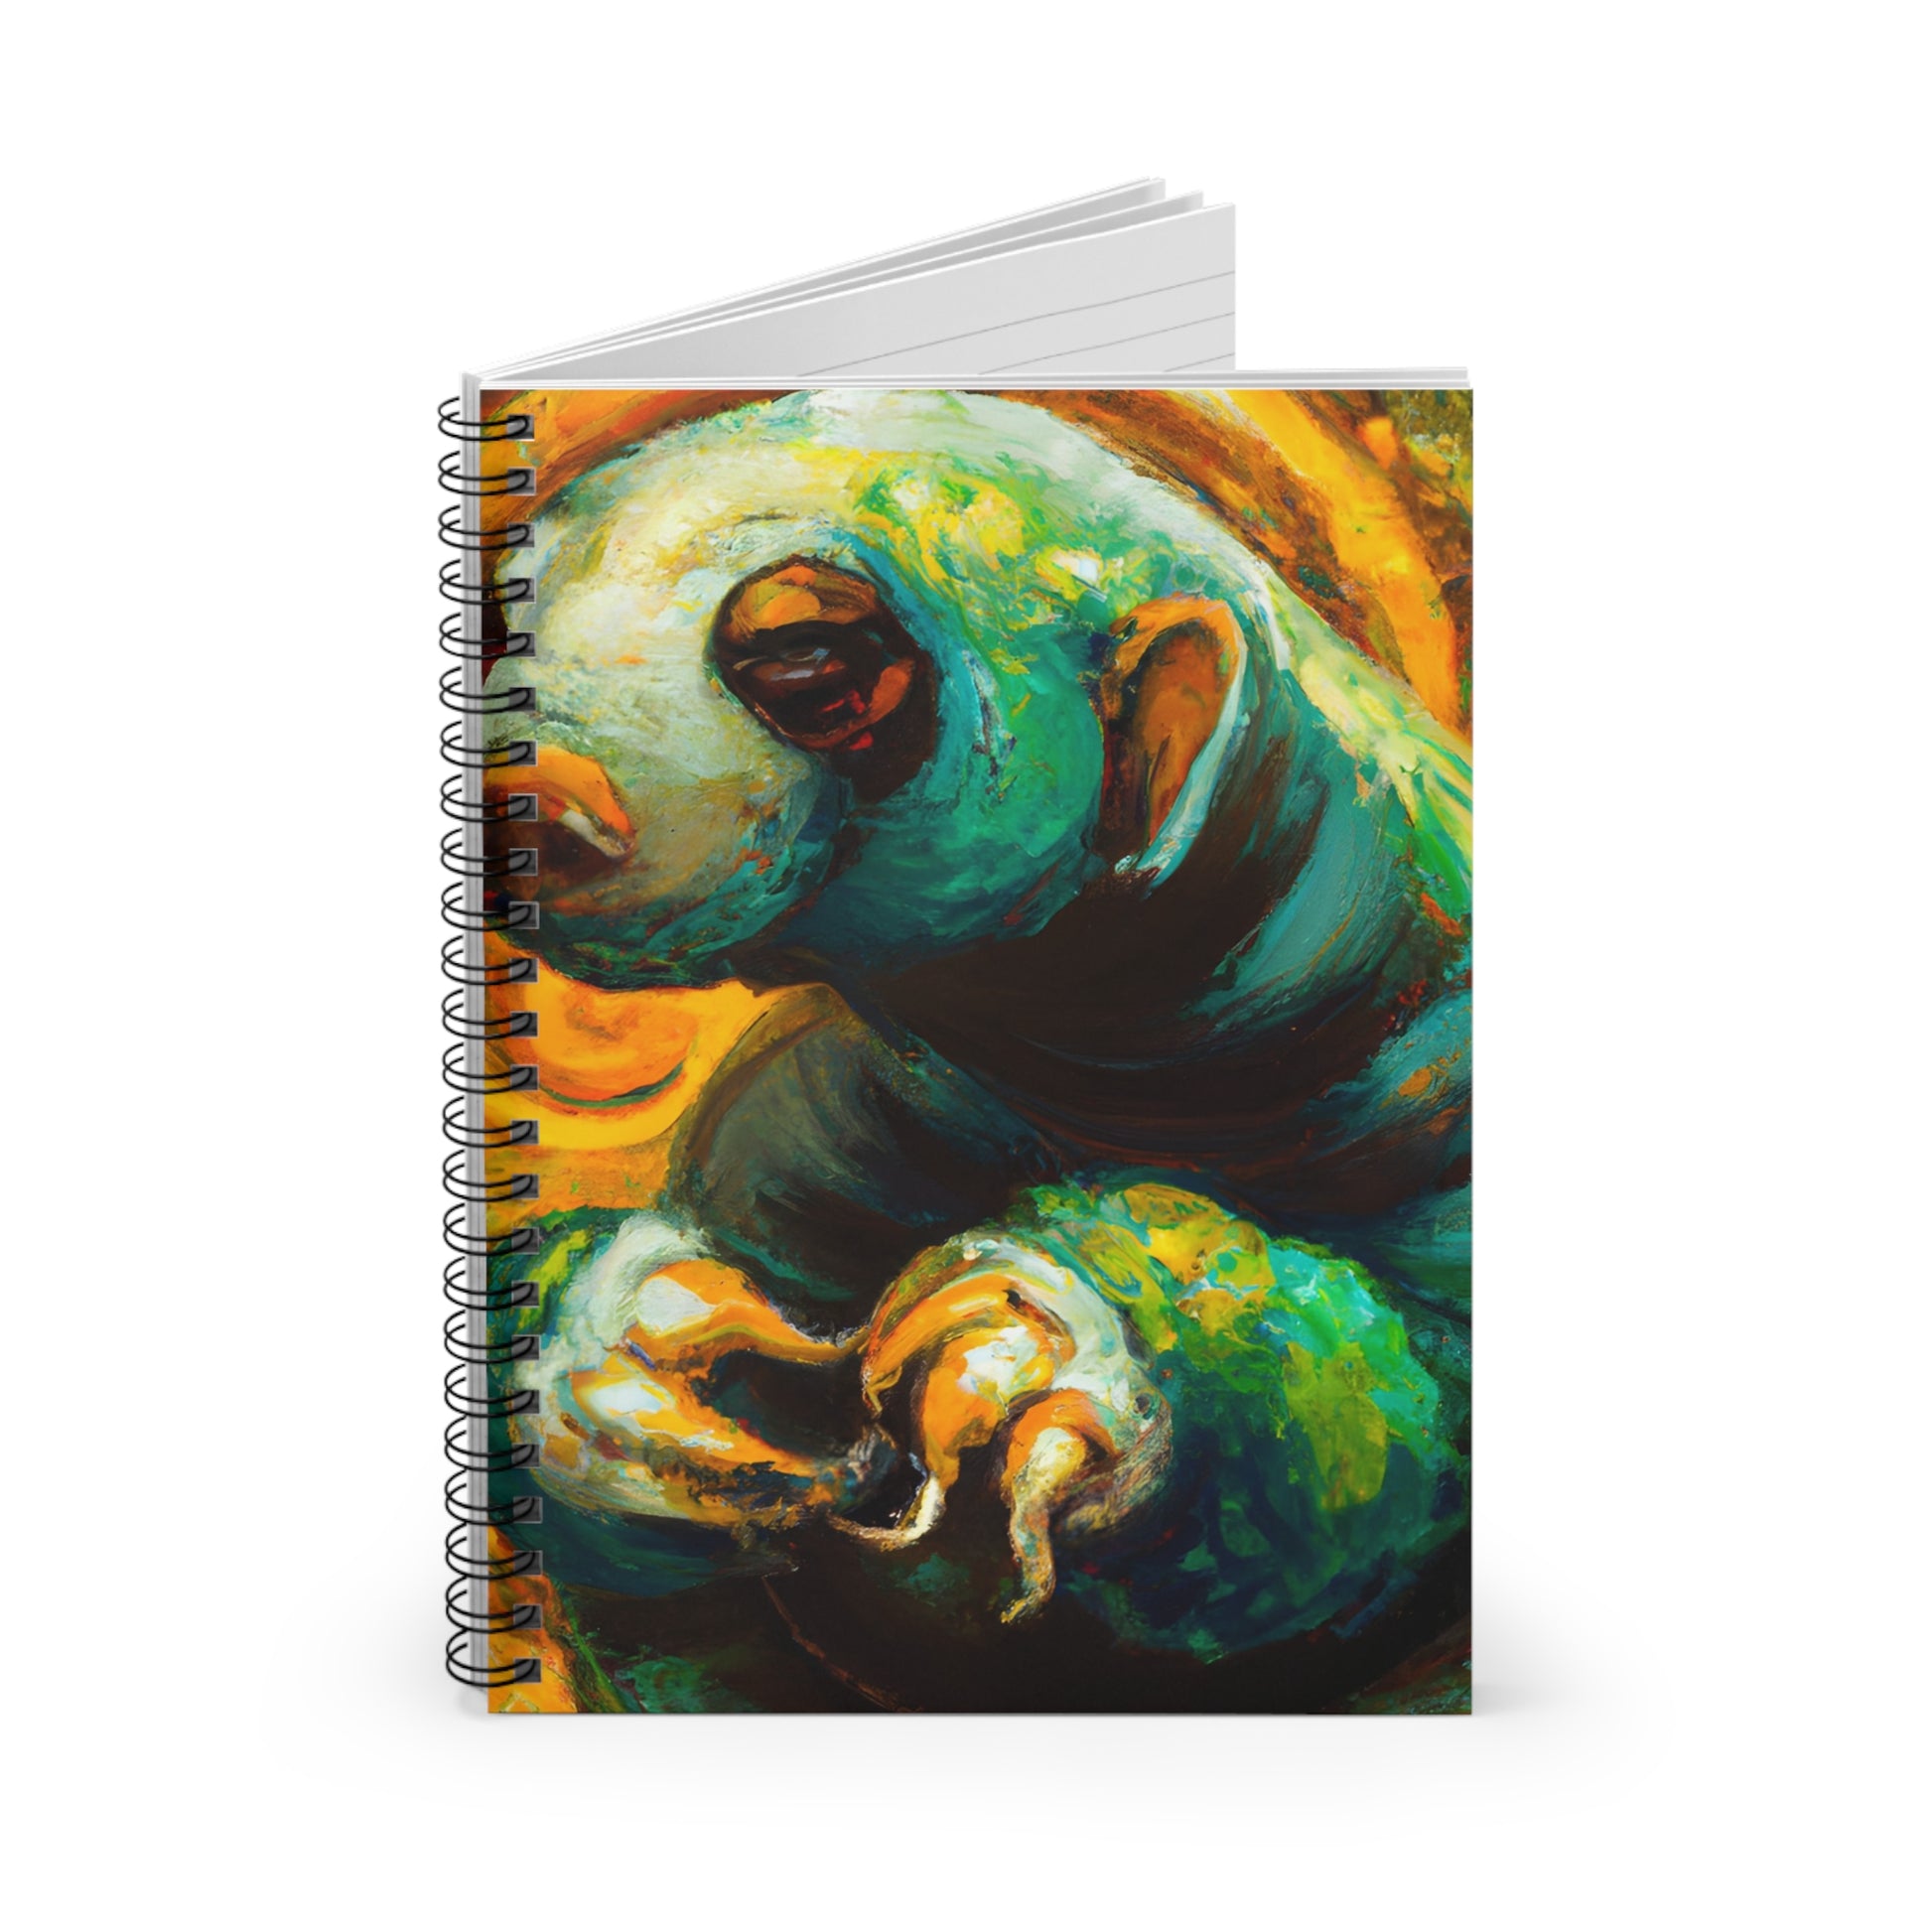 PaintMaster16 Notebook Journal